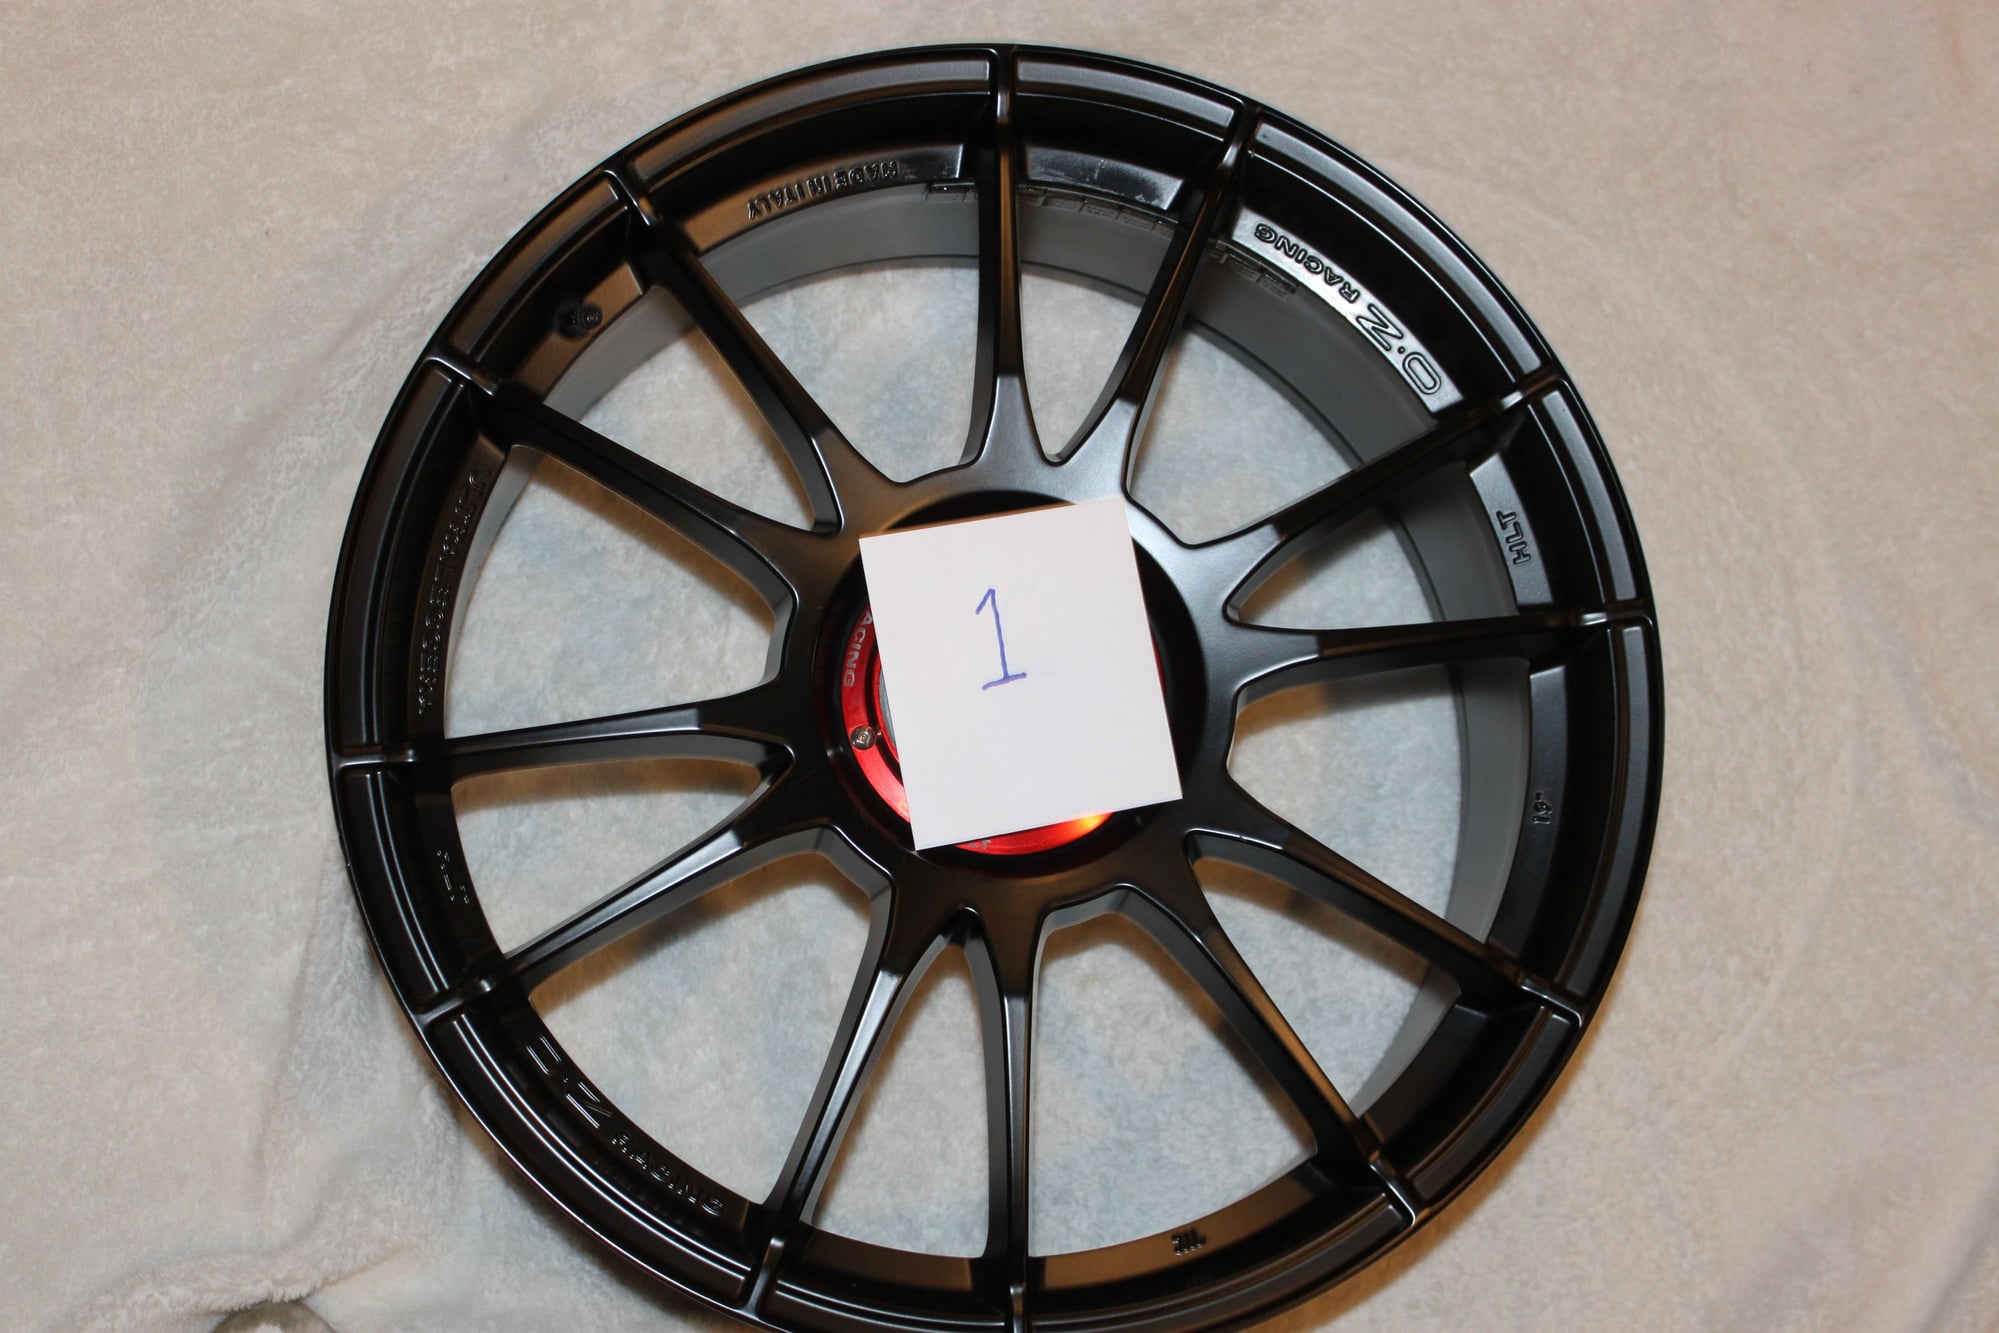 Wheels and Tires/Axles - Set of 4 OZ Racing Ultraleggera 19" Centerlock 997.2 Wheels - Used - 2007 to 2011 Porsche GT3 - Clarendon Hills, IL 60514, United States